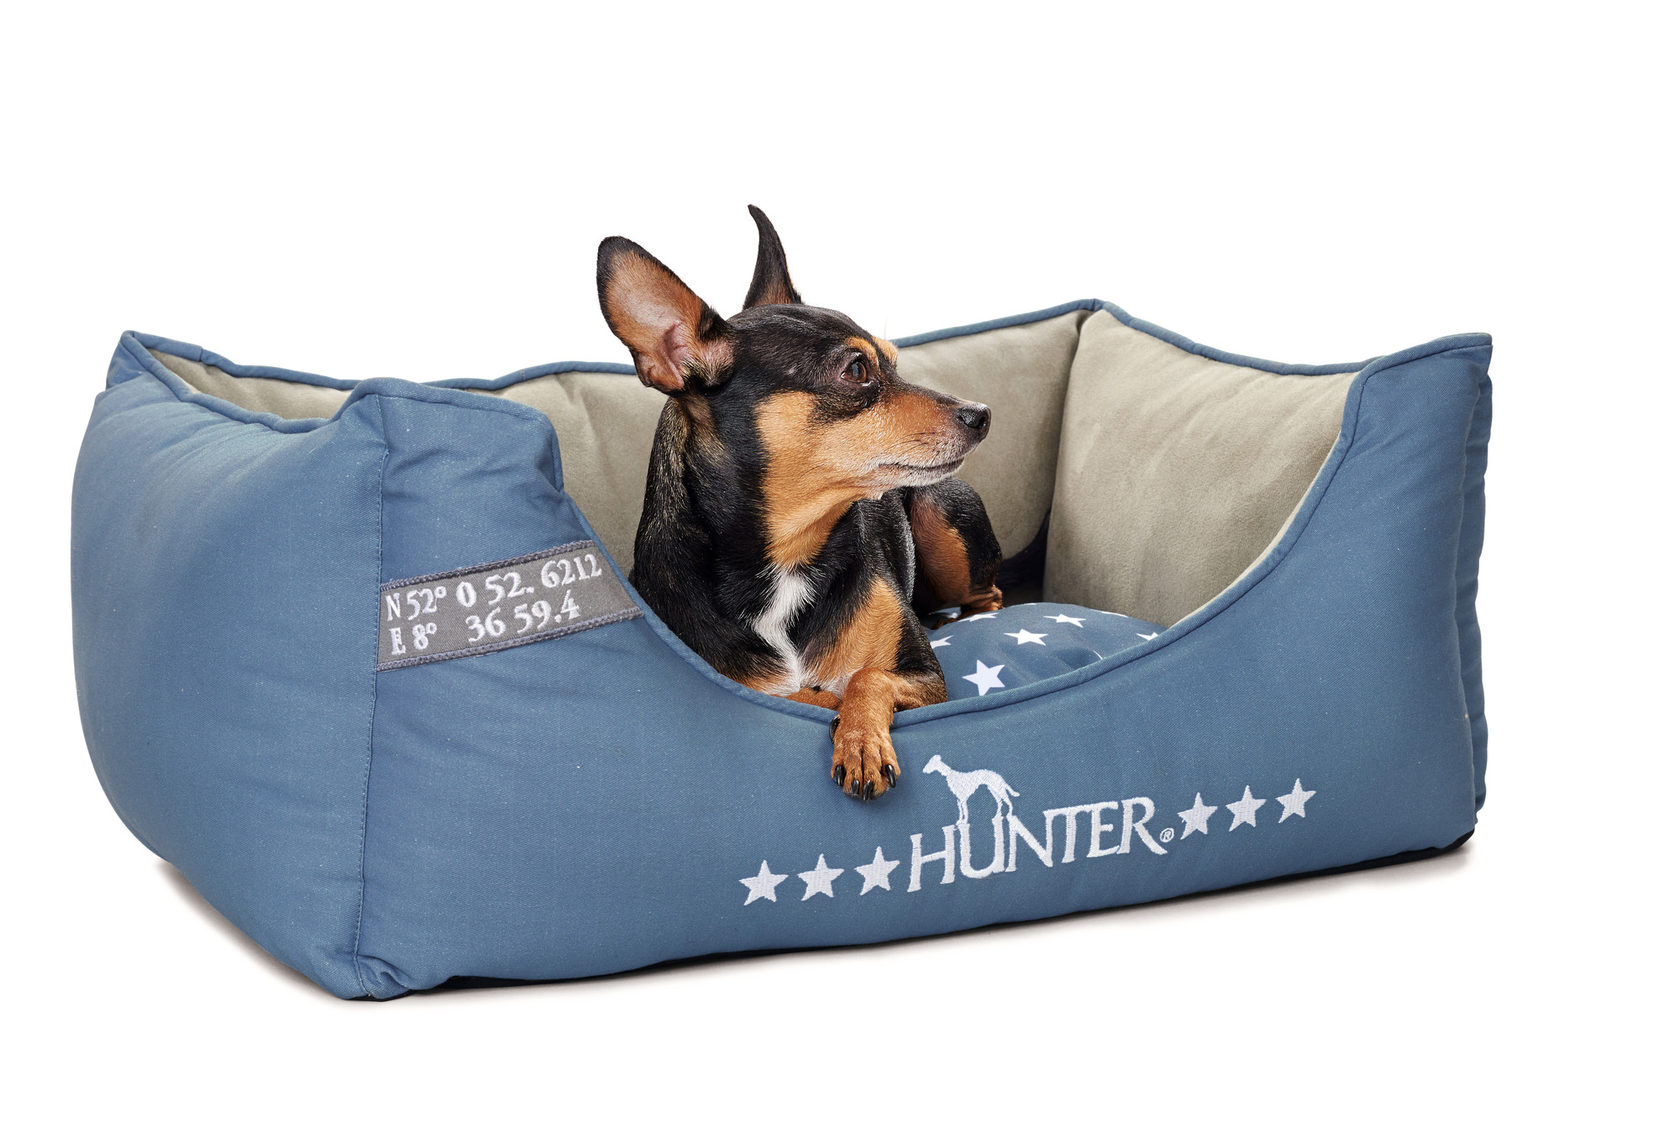    Hunter софа для собак Aarhus 100х70 см, хлопок/полиэстер, синий